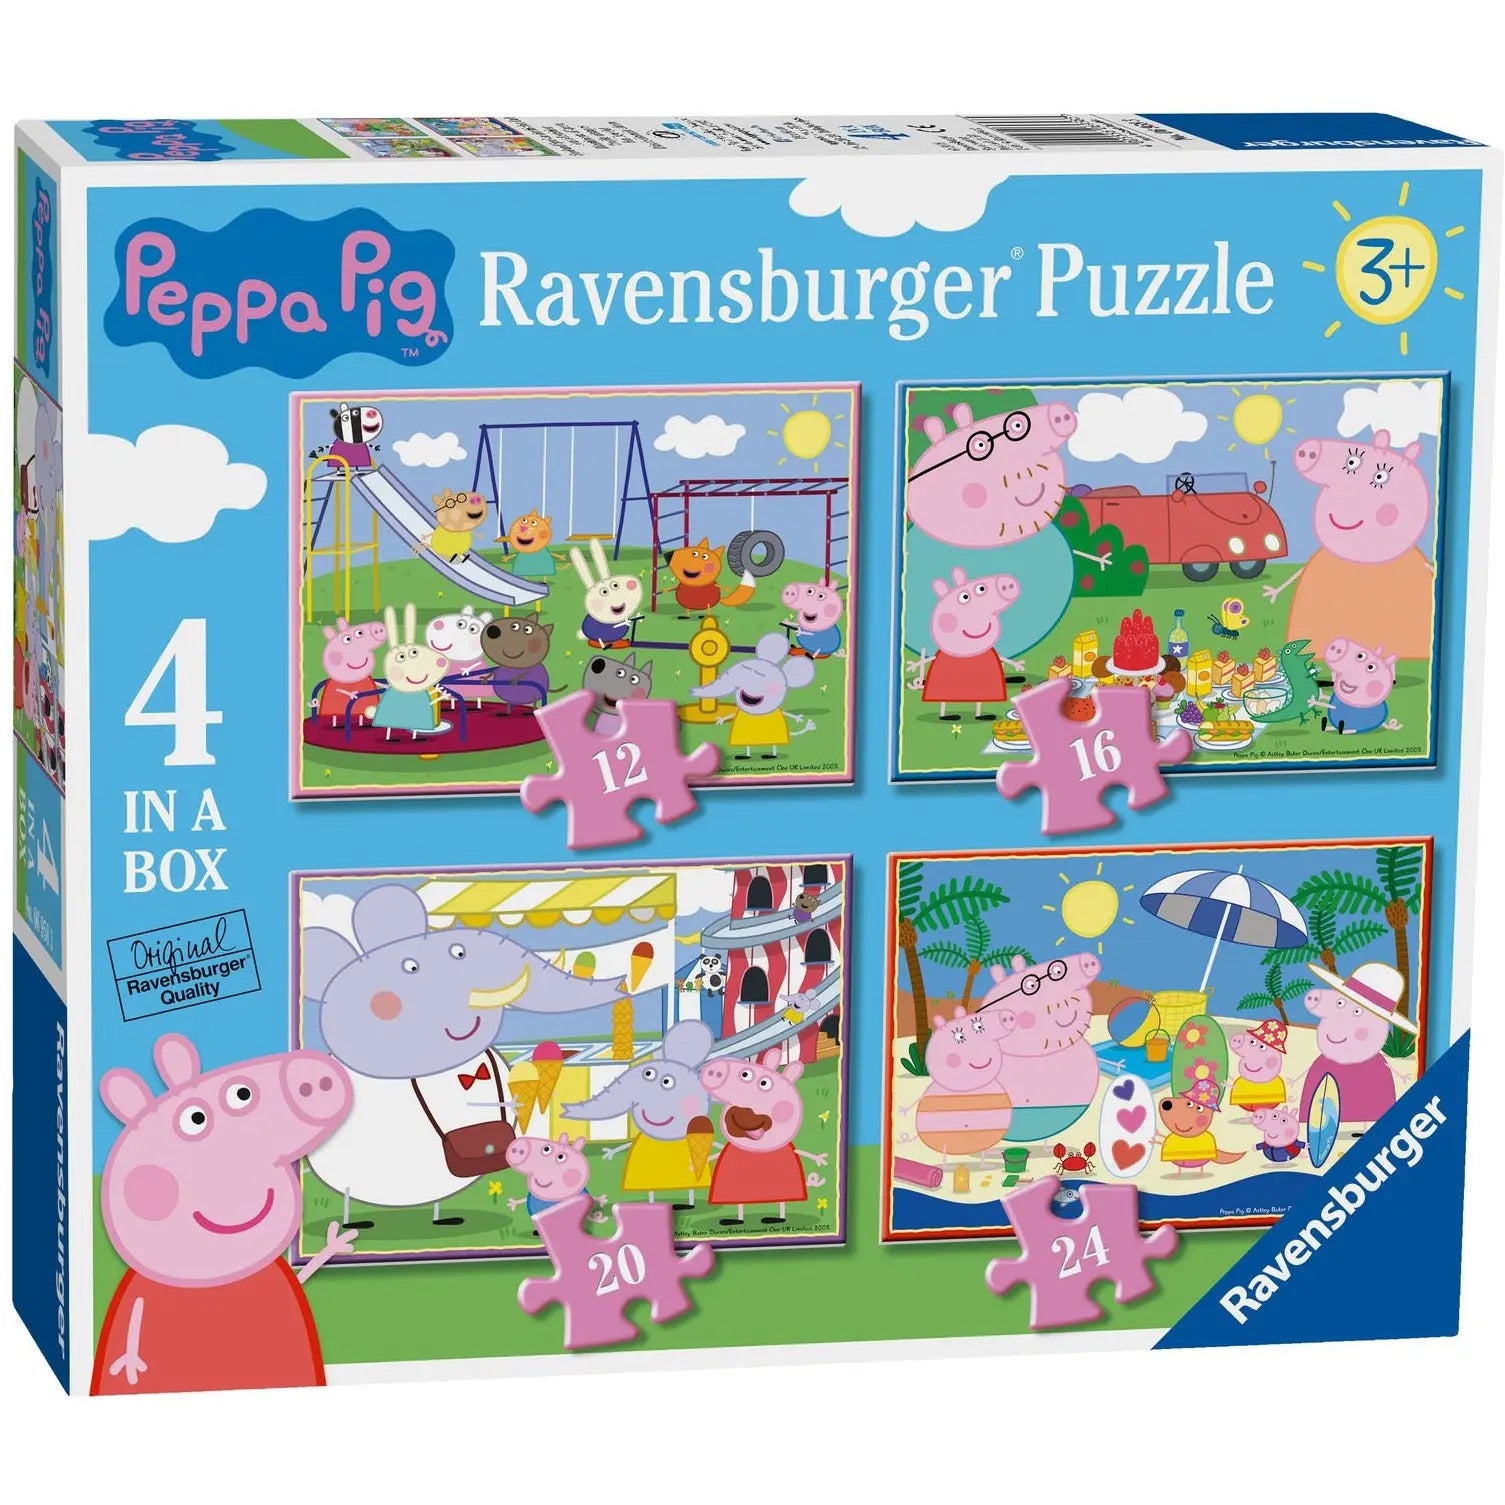 Peppa Pig 4 in a Box Jigsaw Puzzle Ravensburger